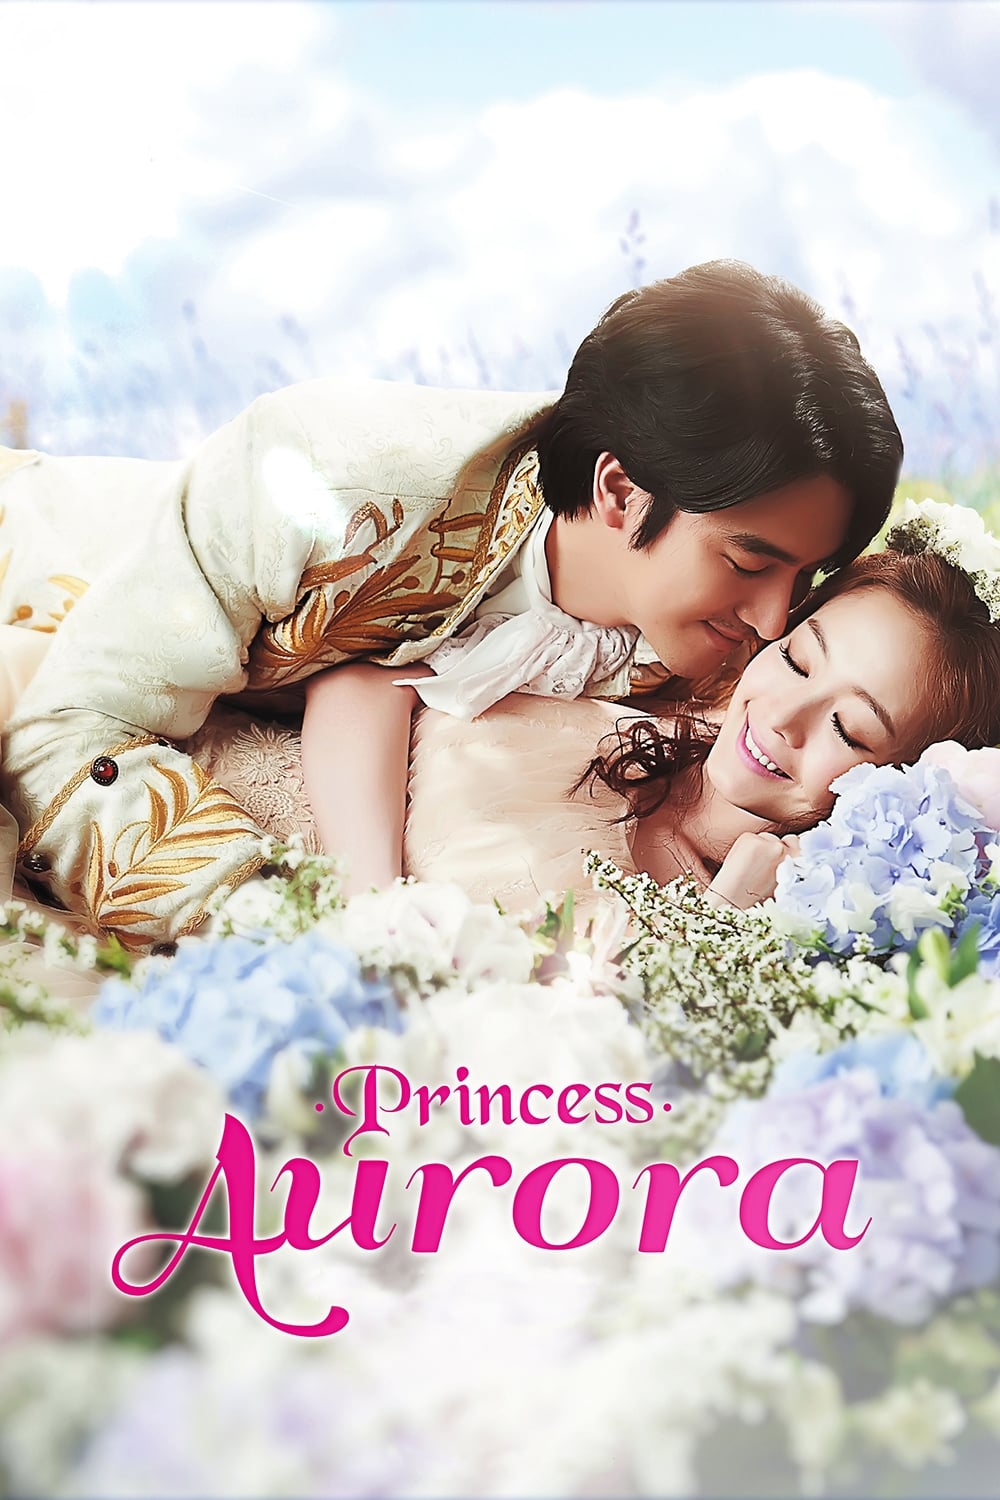 Princess Aurora (2013)